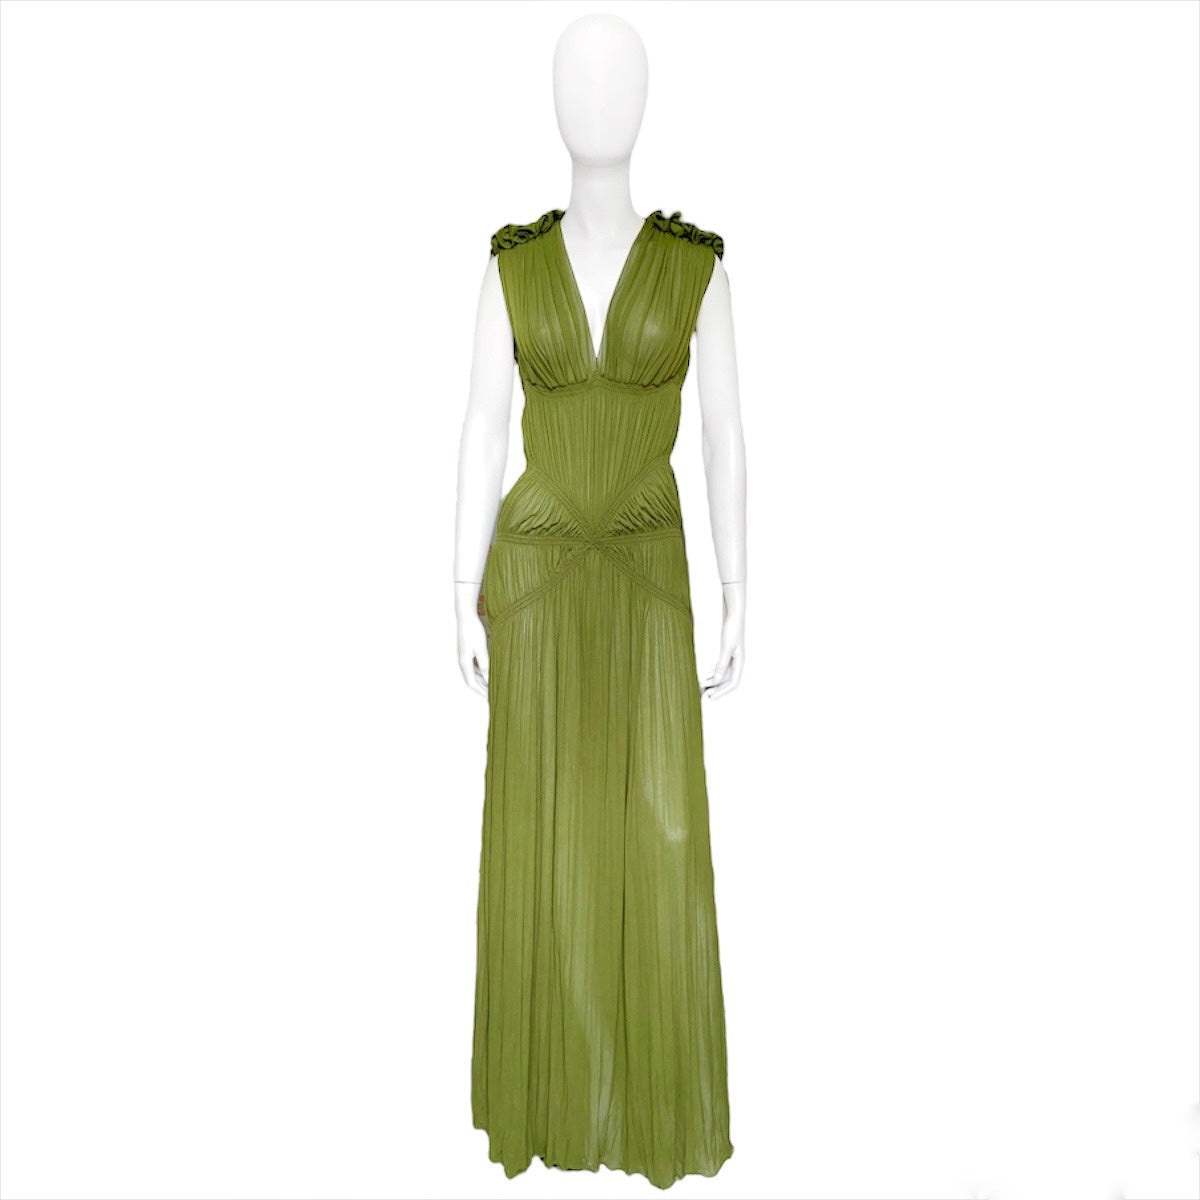 Jean Paul Gaultier spring 2011 green pleated ruffles maxi dress - 1